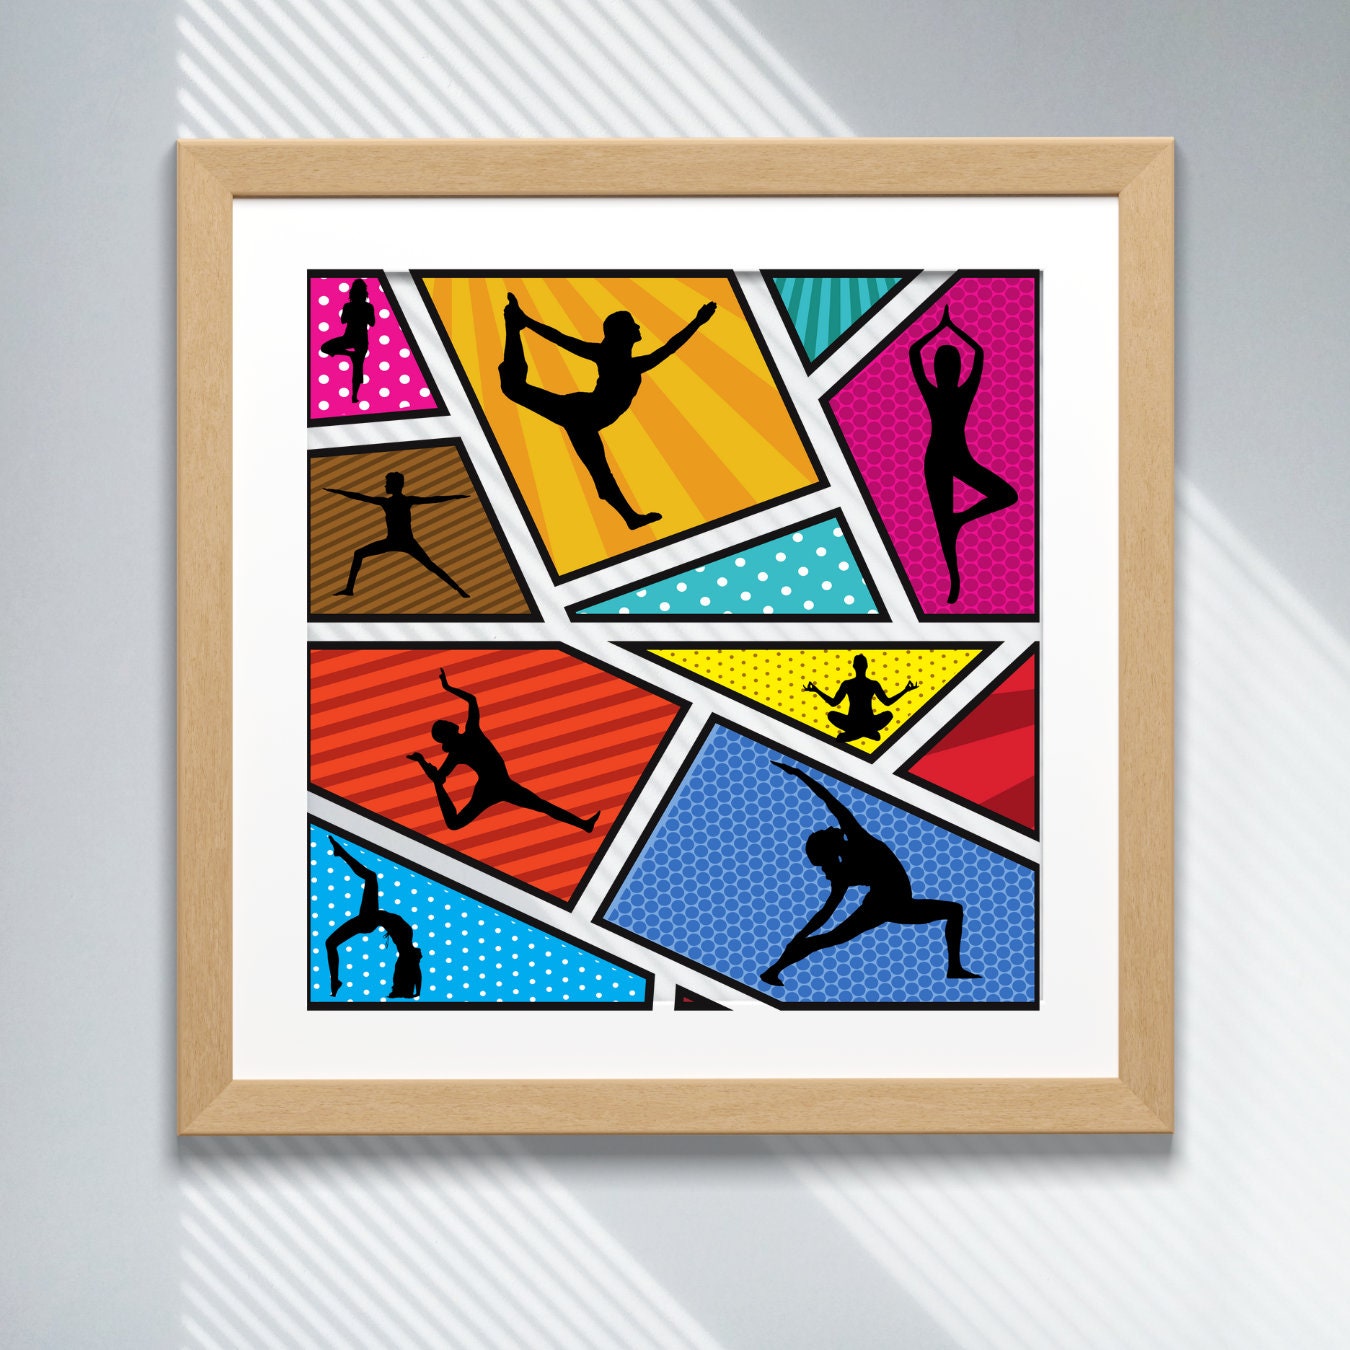 Buy Digital Art, Yoga Studio Poster, HD Downloadable Wall Decor